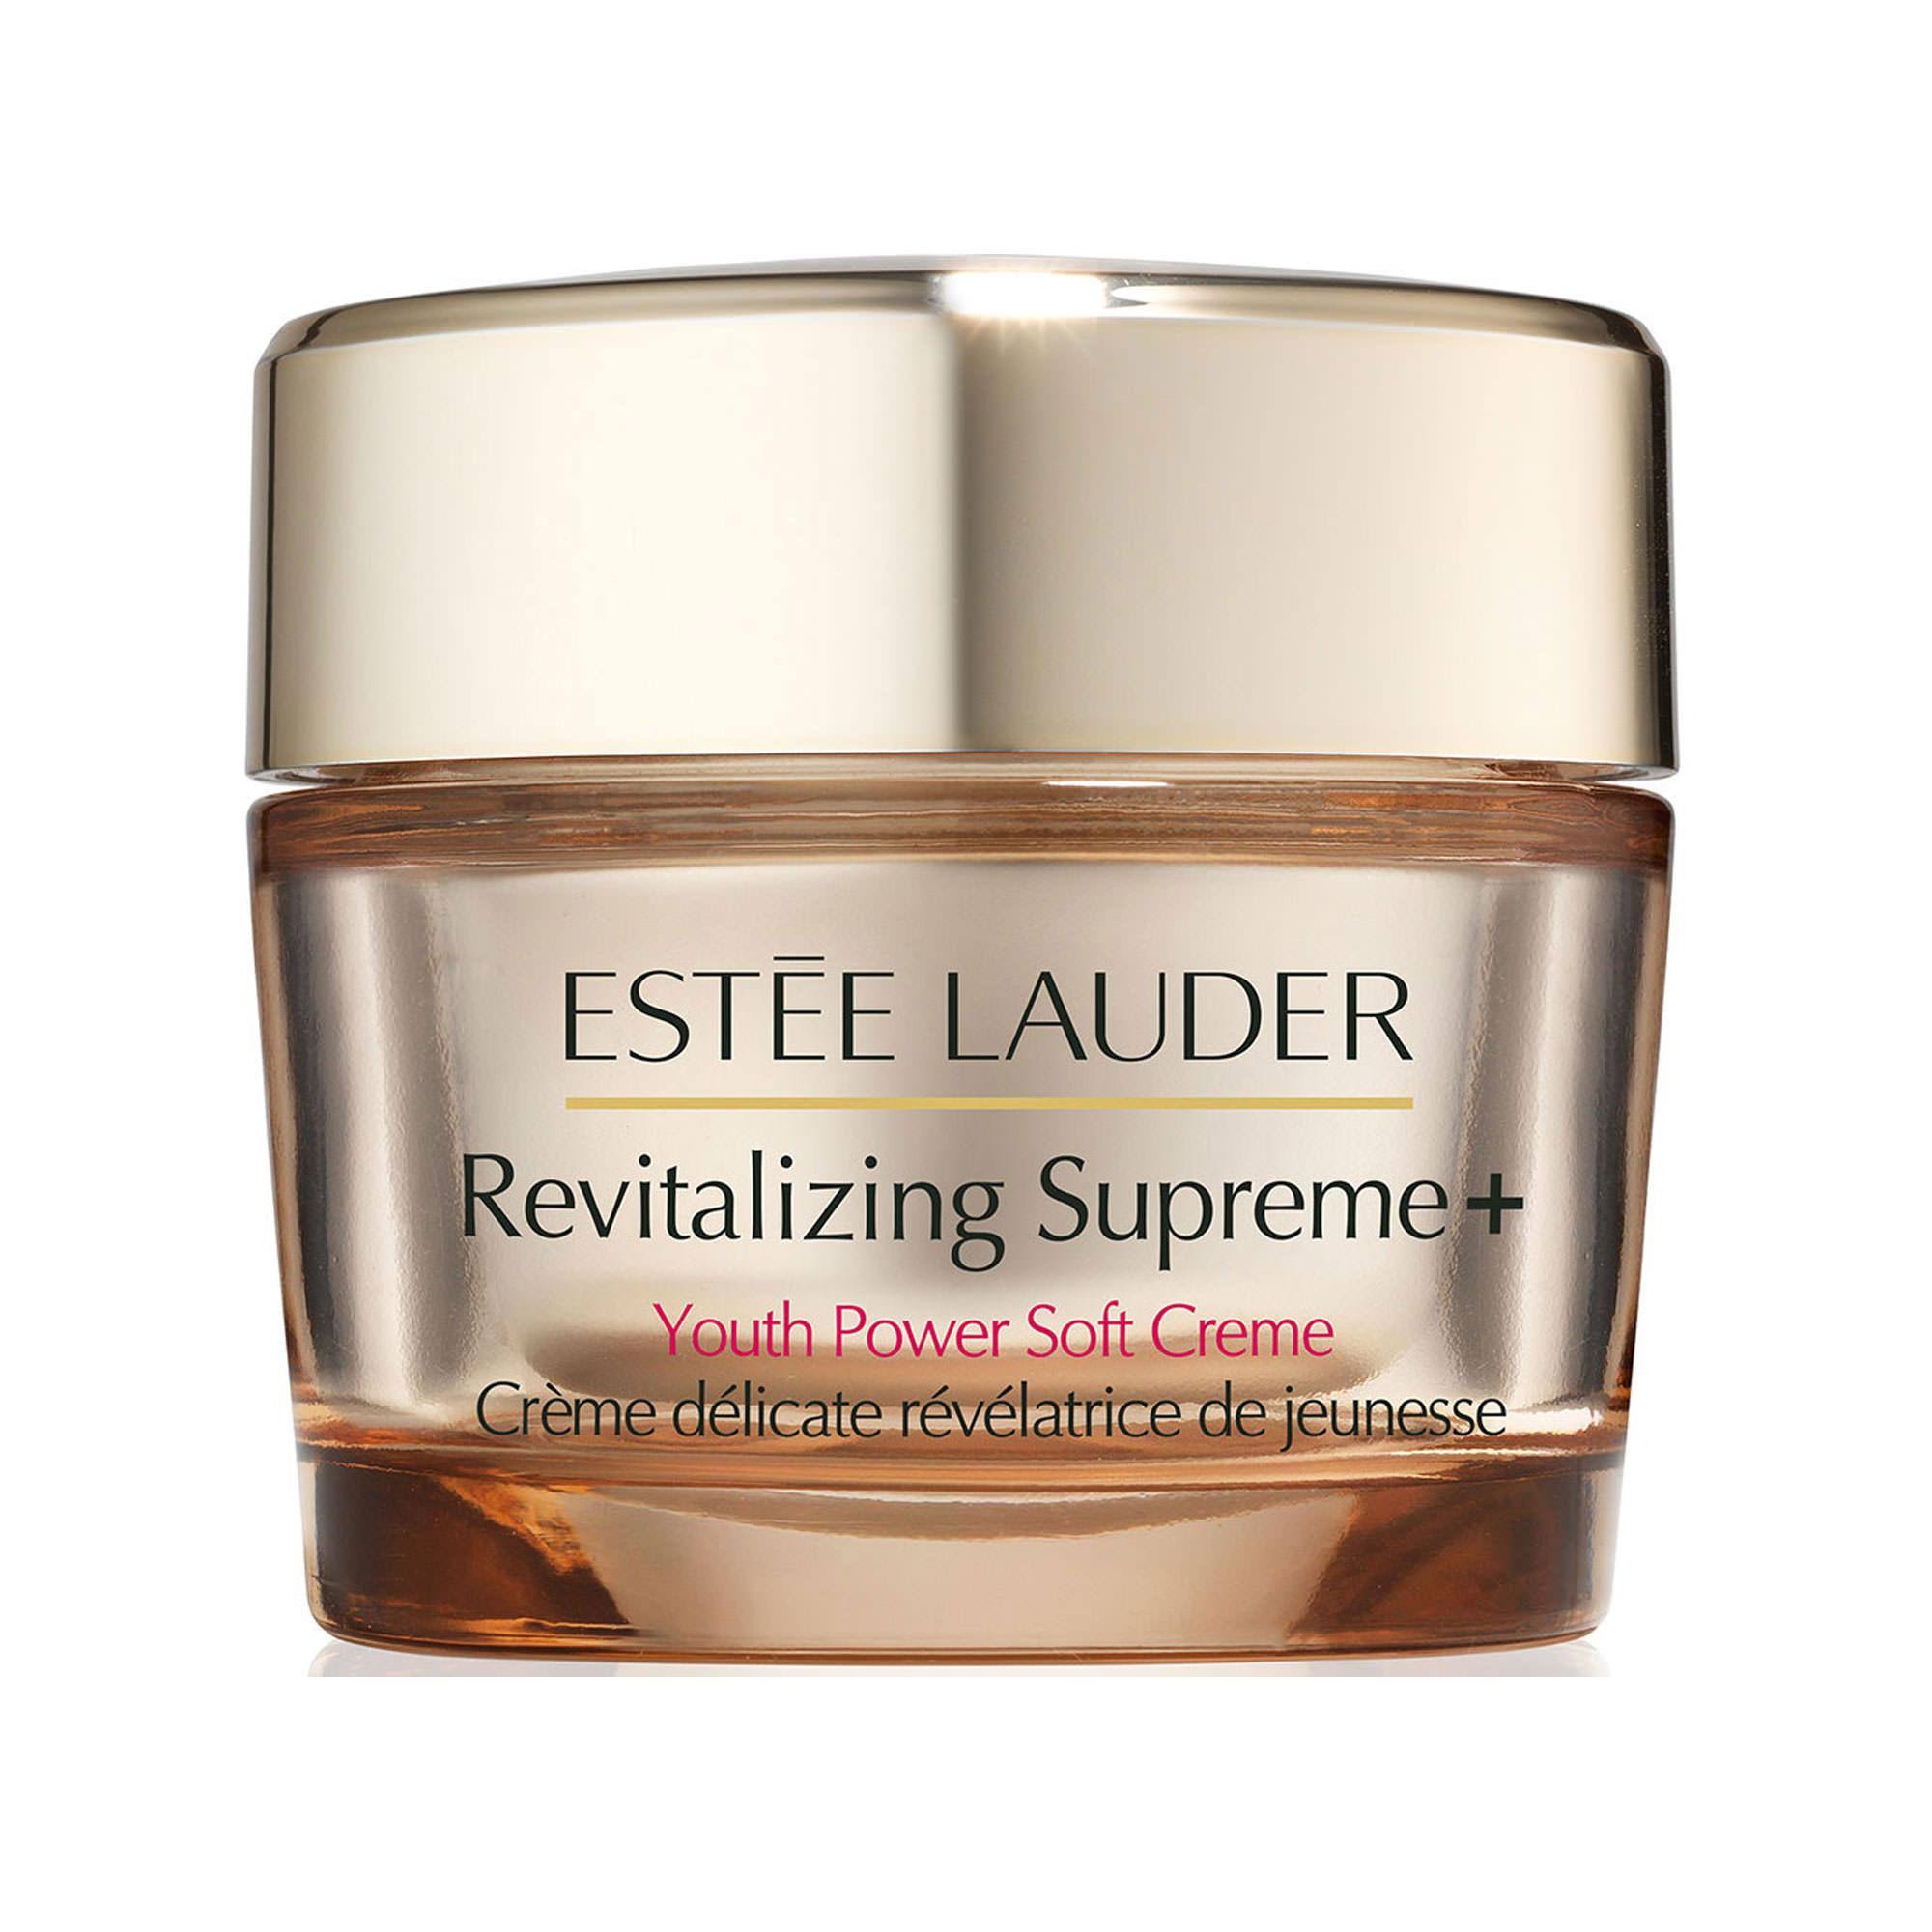 Estee Lauder Revitalizing Supreme + Youth Power Soft Creme 50ml